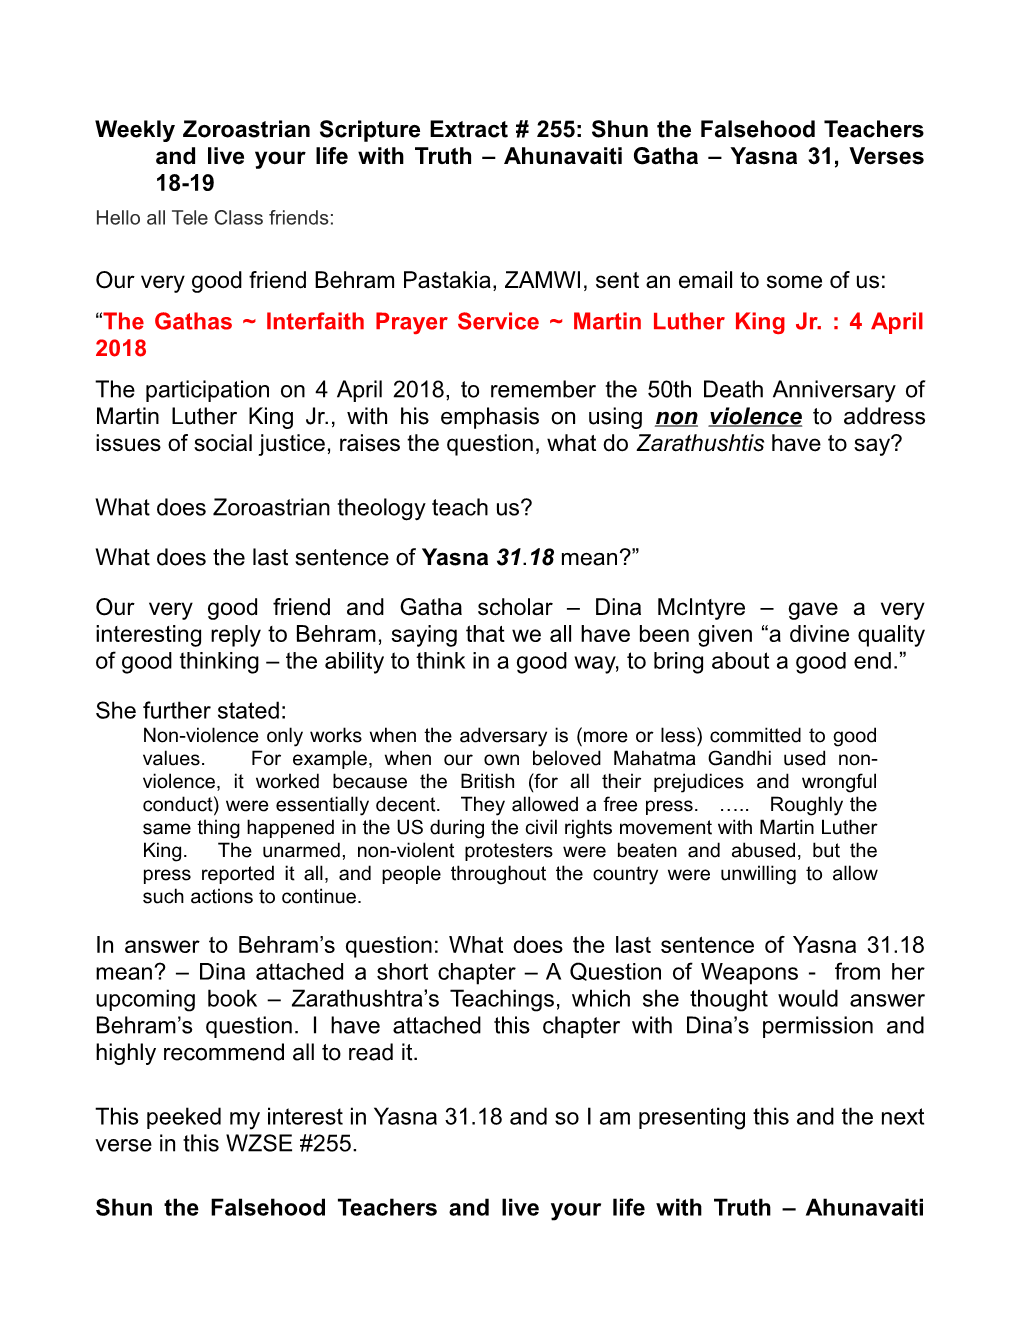 Weekly Zoroastrian Scripture Extract # 255: Shun The